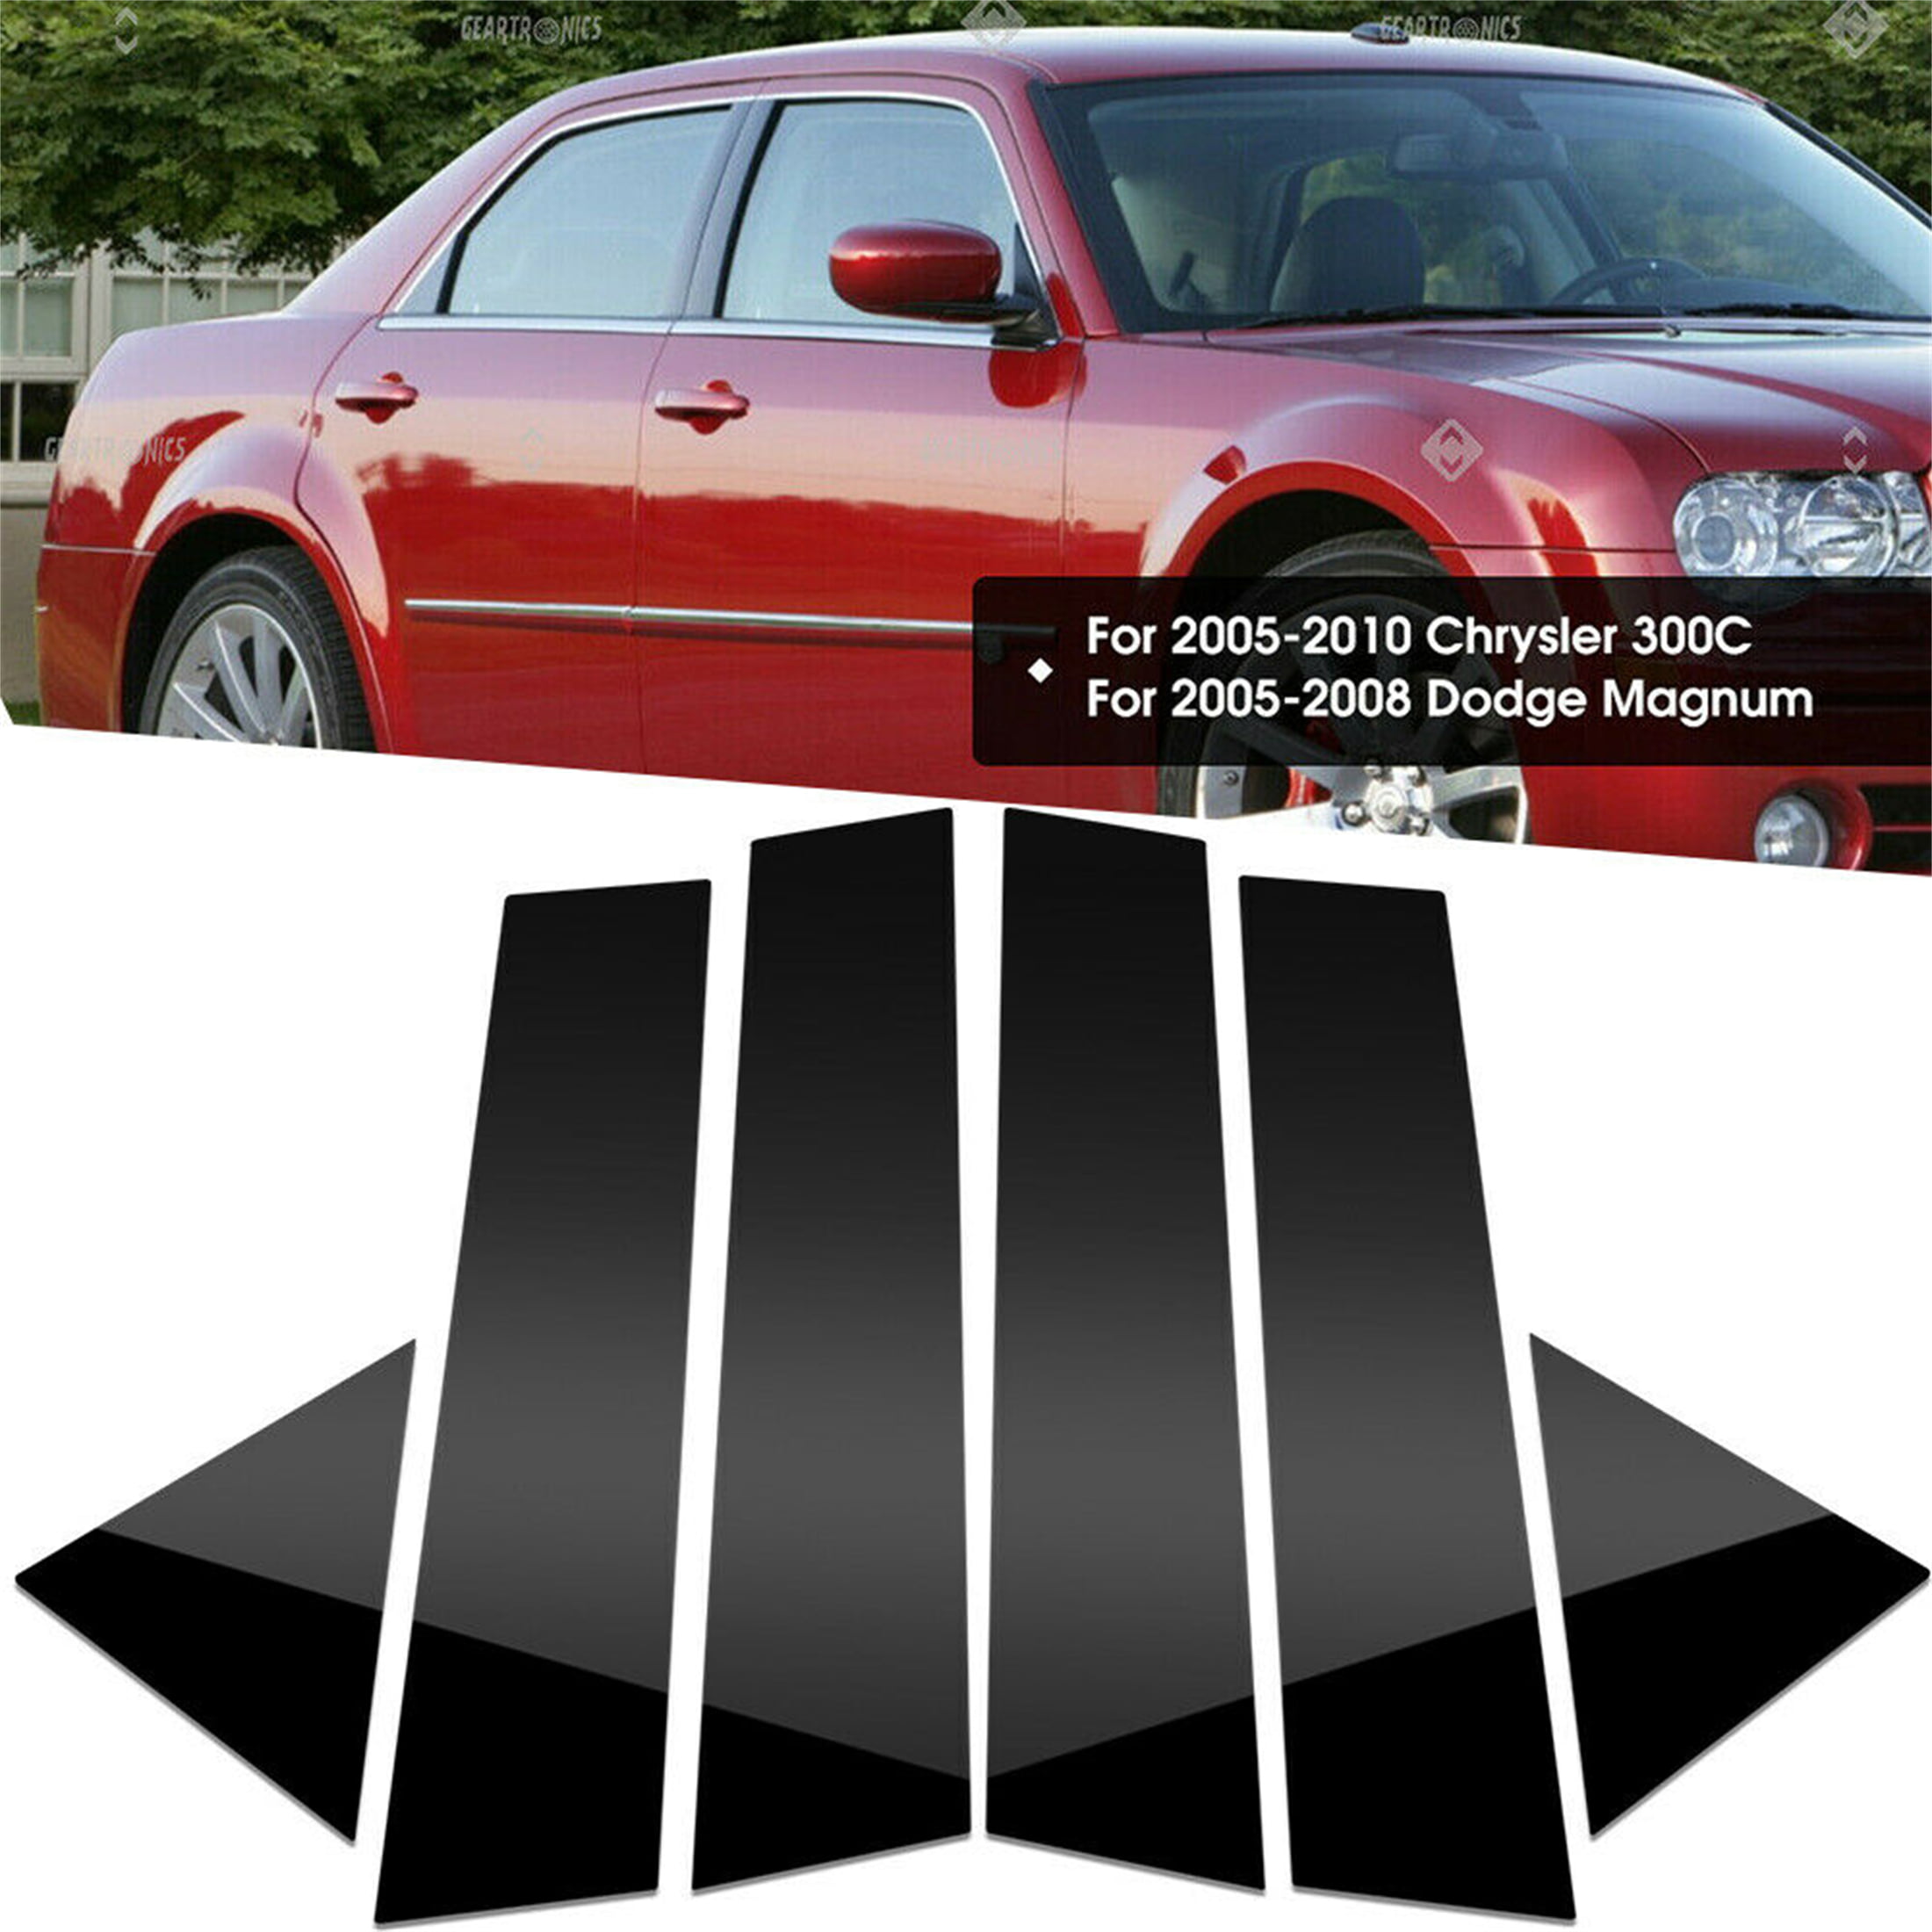 Black Pillar Posts fit Chrysler 300C & Dodge Magnum 05-10 6pc Set Door Cover 